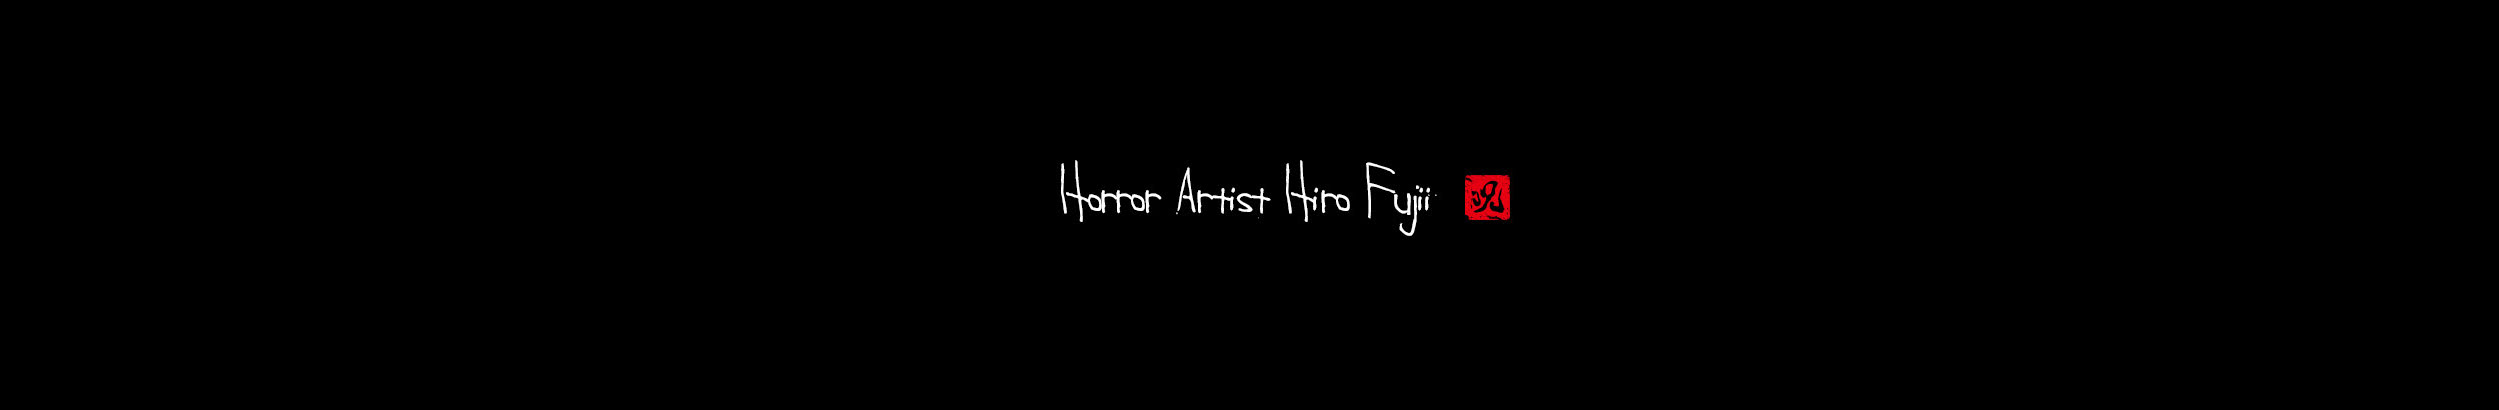 Hiro Fujii's profile banner